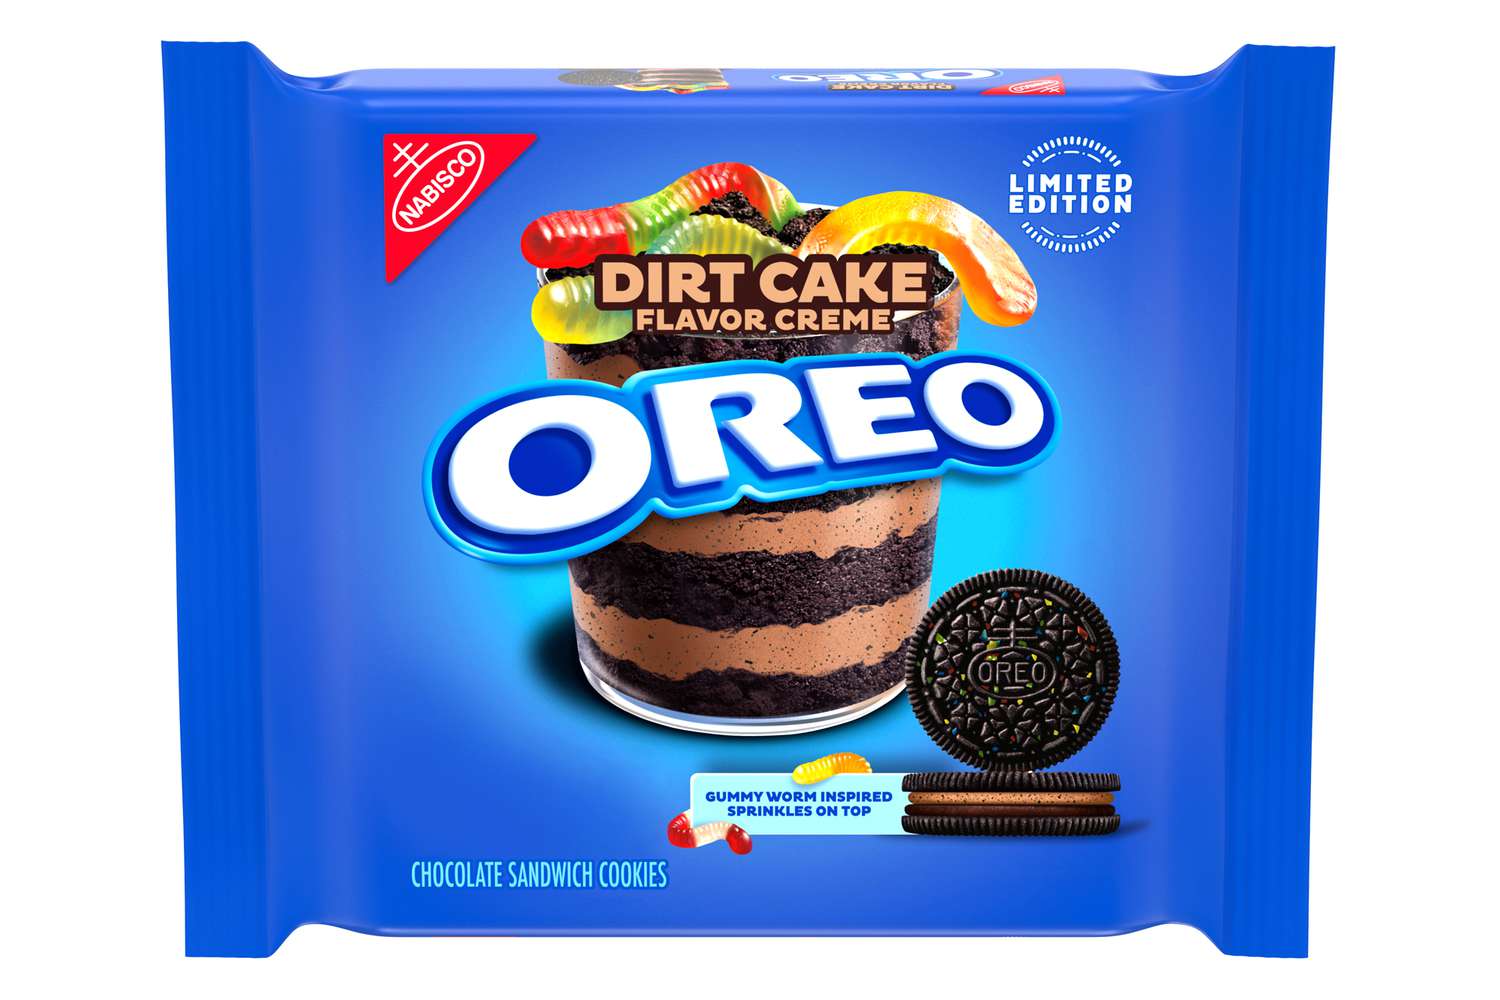 Oreo Dirt Cake Creme Sandwich Cookies - 303g